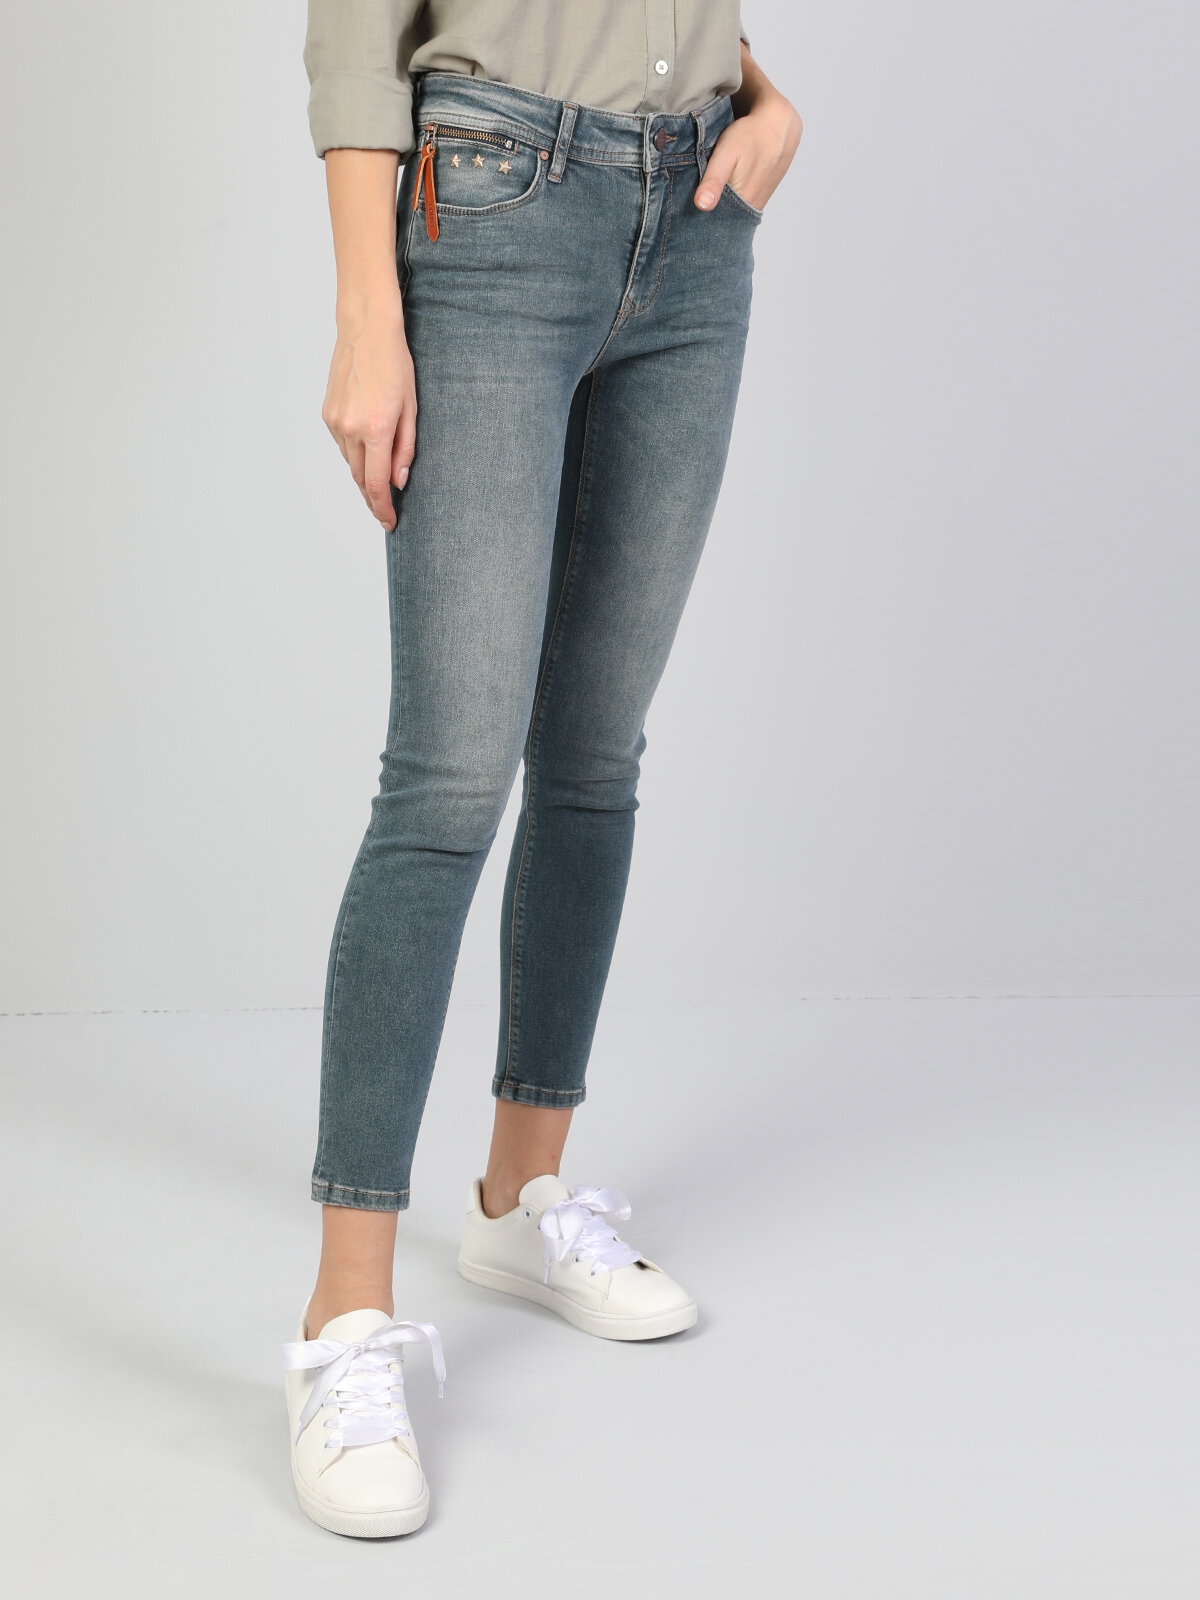 759 Lara Orta Bel Dar Paça Super Slim Fit Mavi Kadın Jean Pantolon